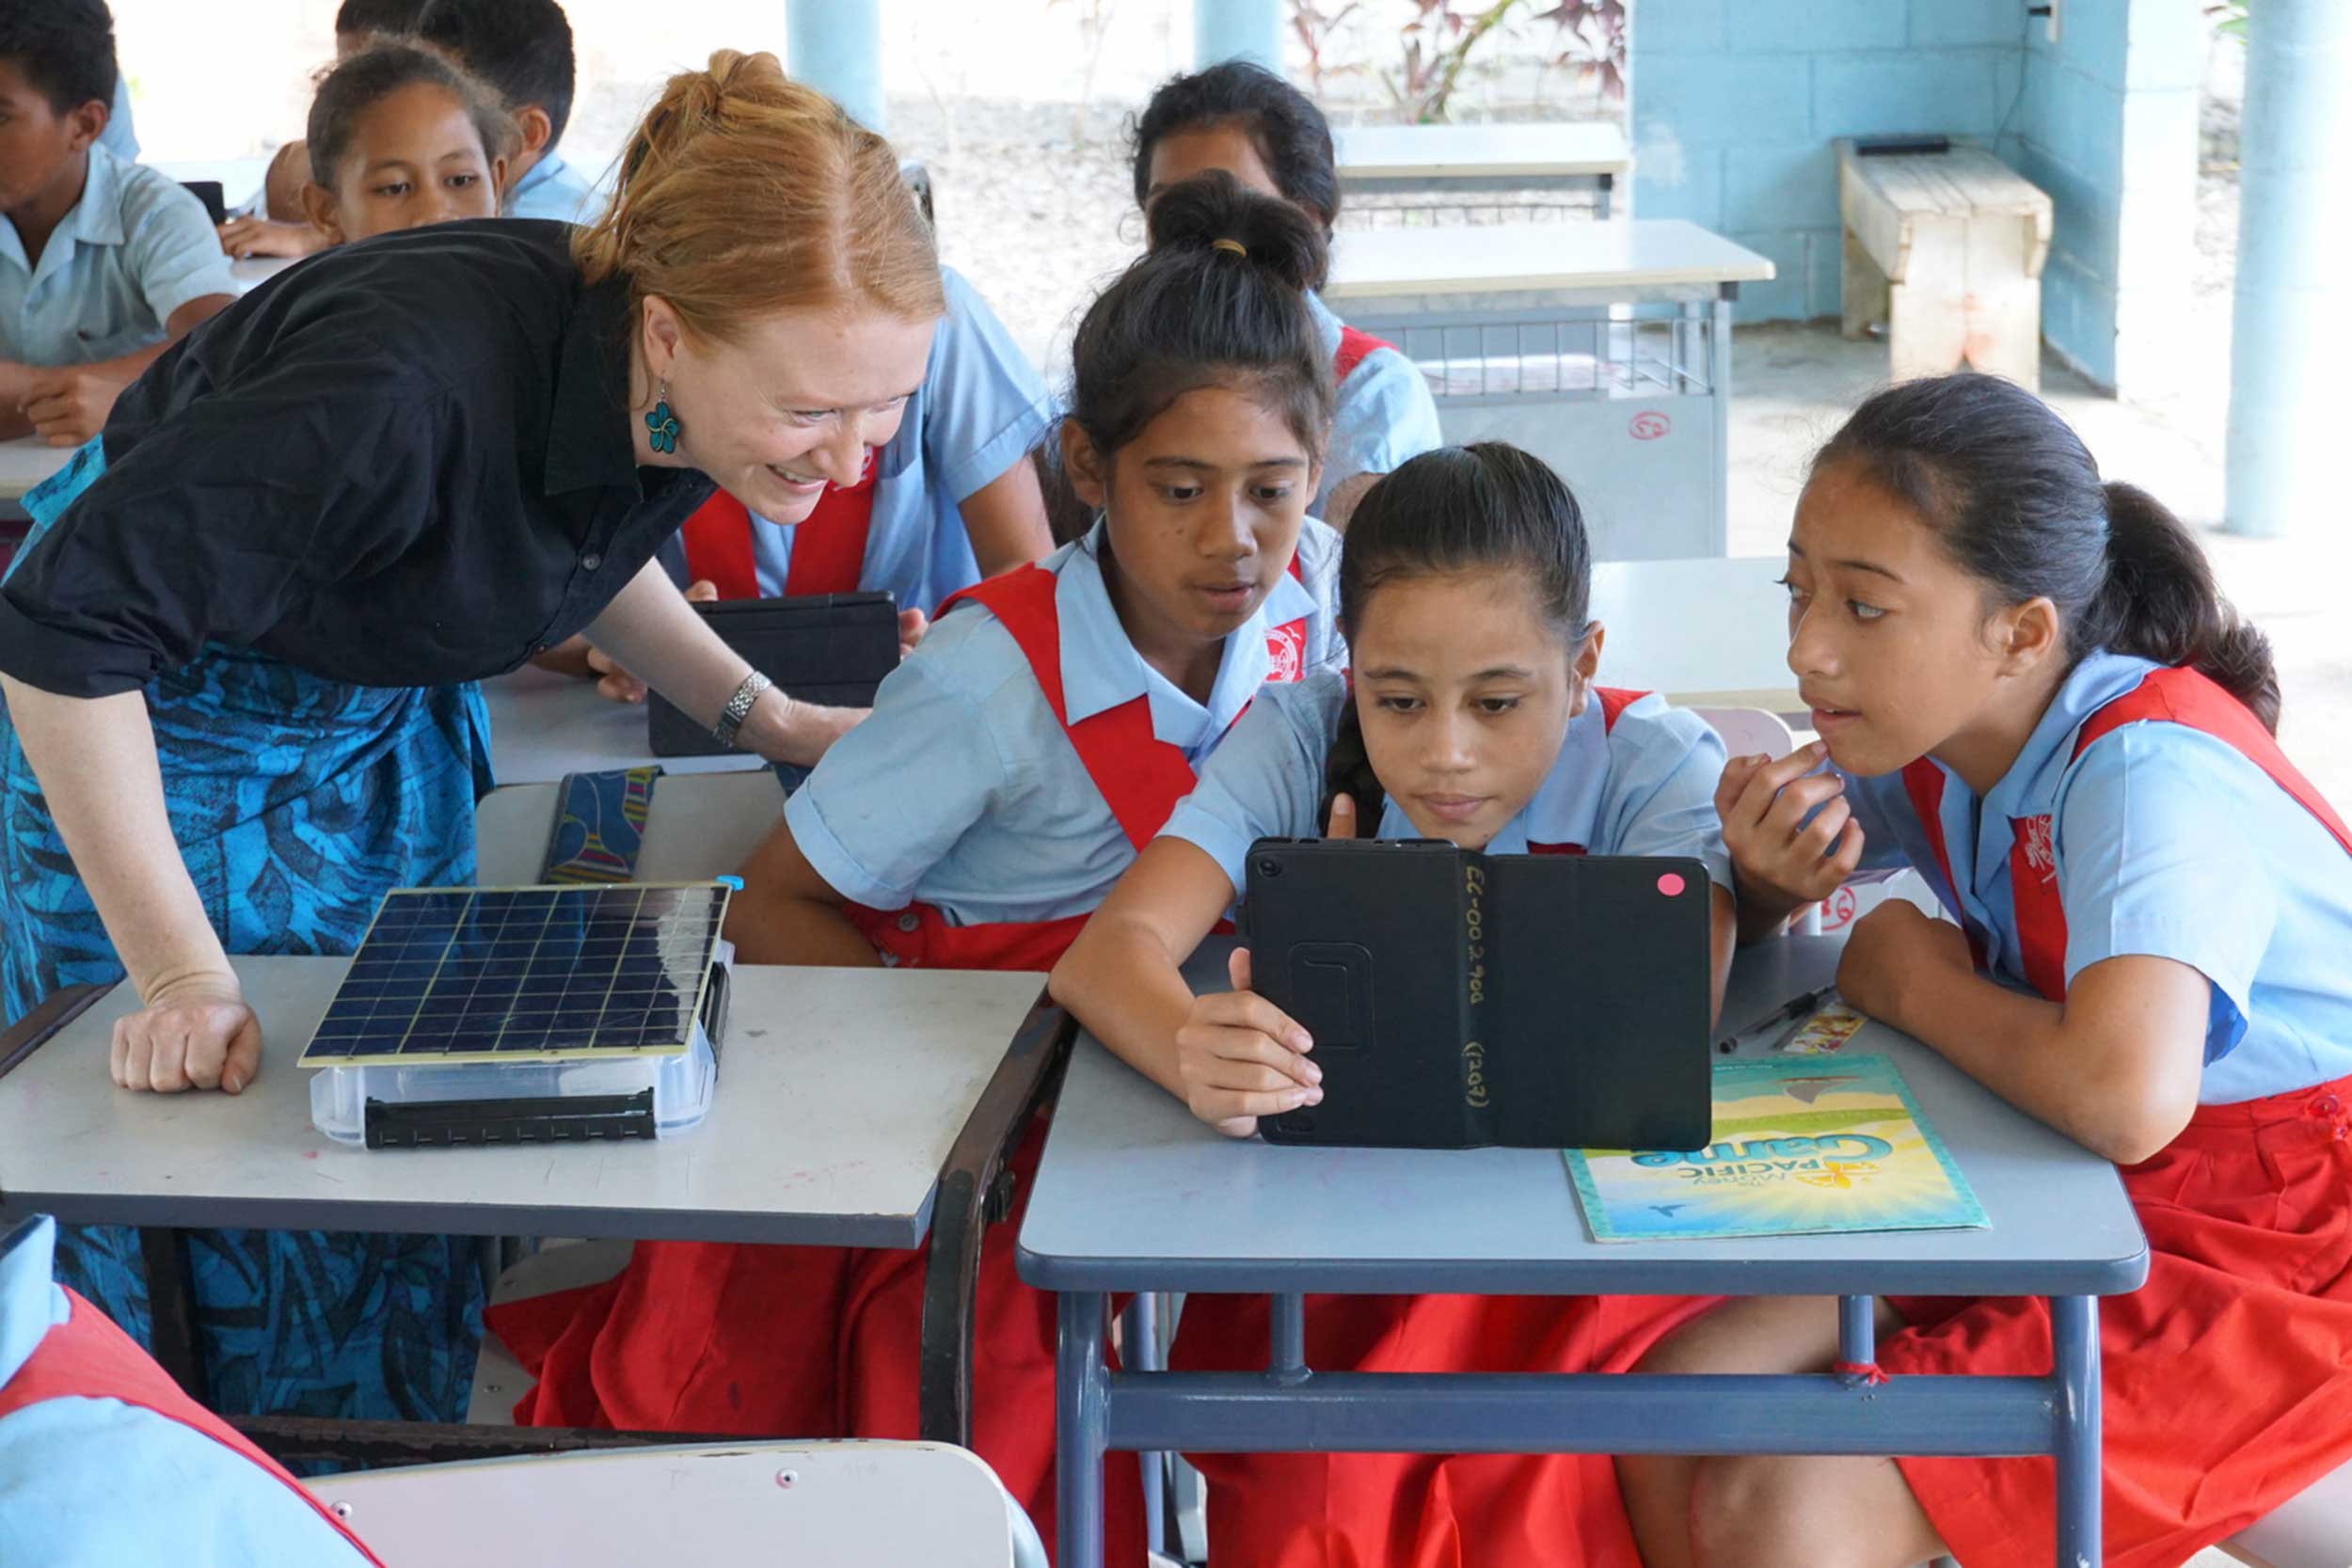 Laura Hosman, creator of SolarSPELL, works with girls in Samoa